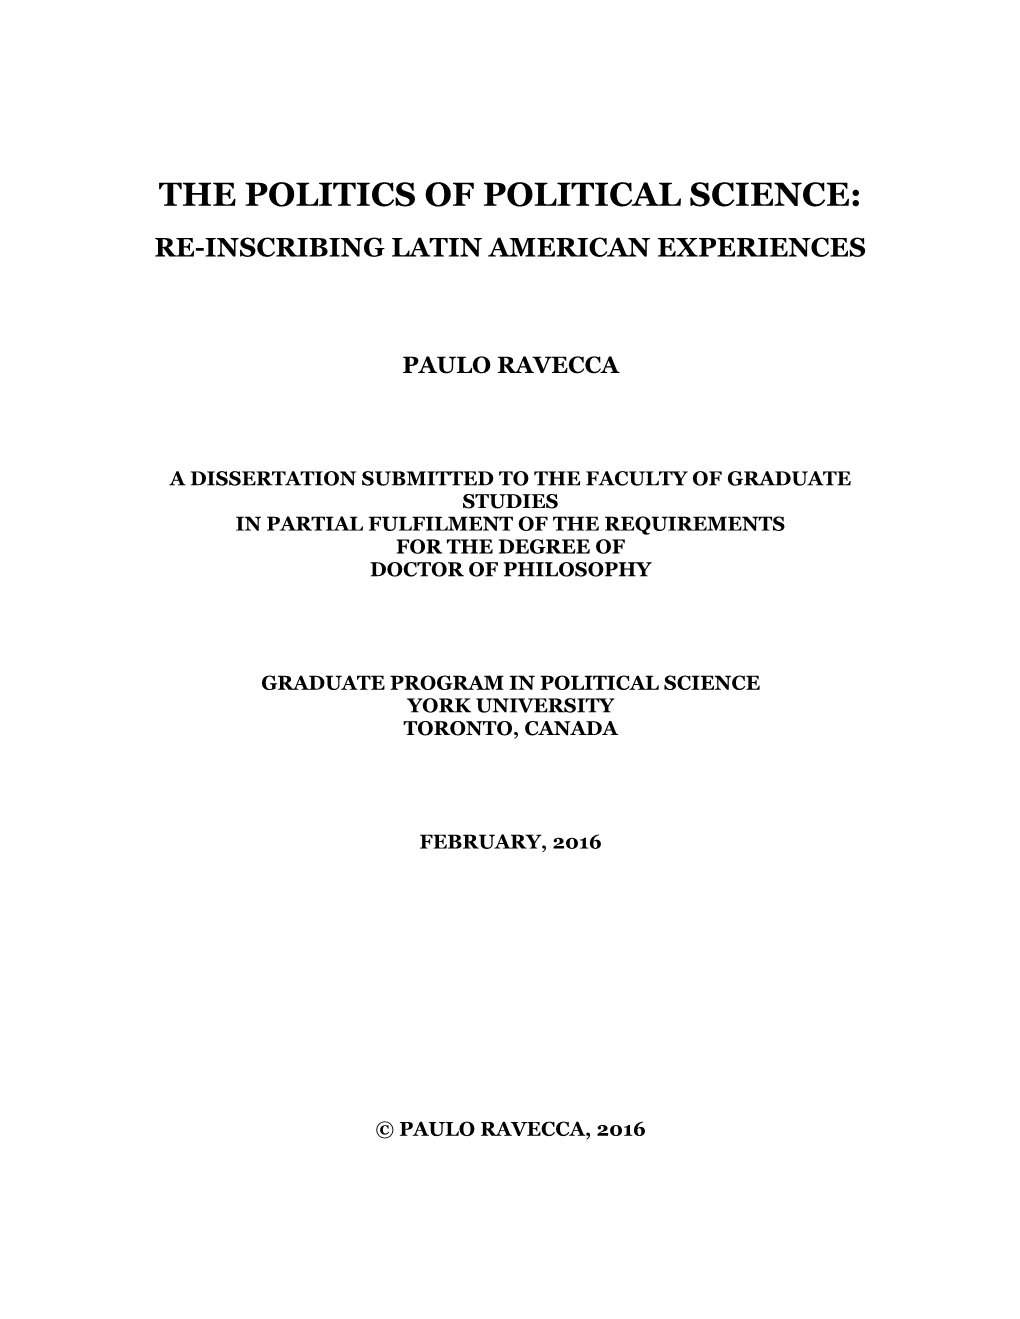 The Politics of Political Science: Re-Inscribing Latin American Experiences